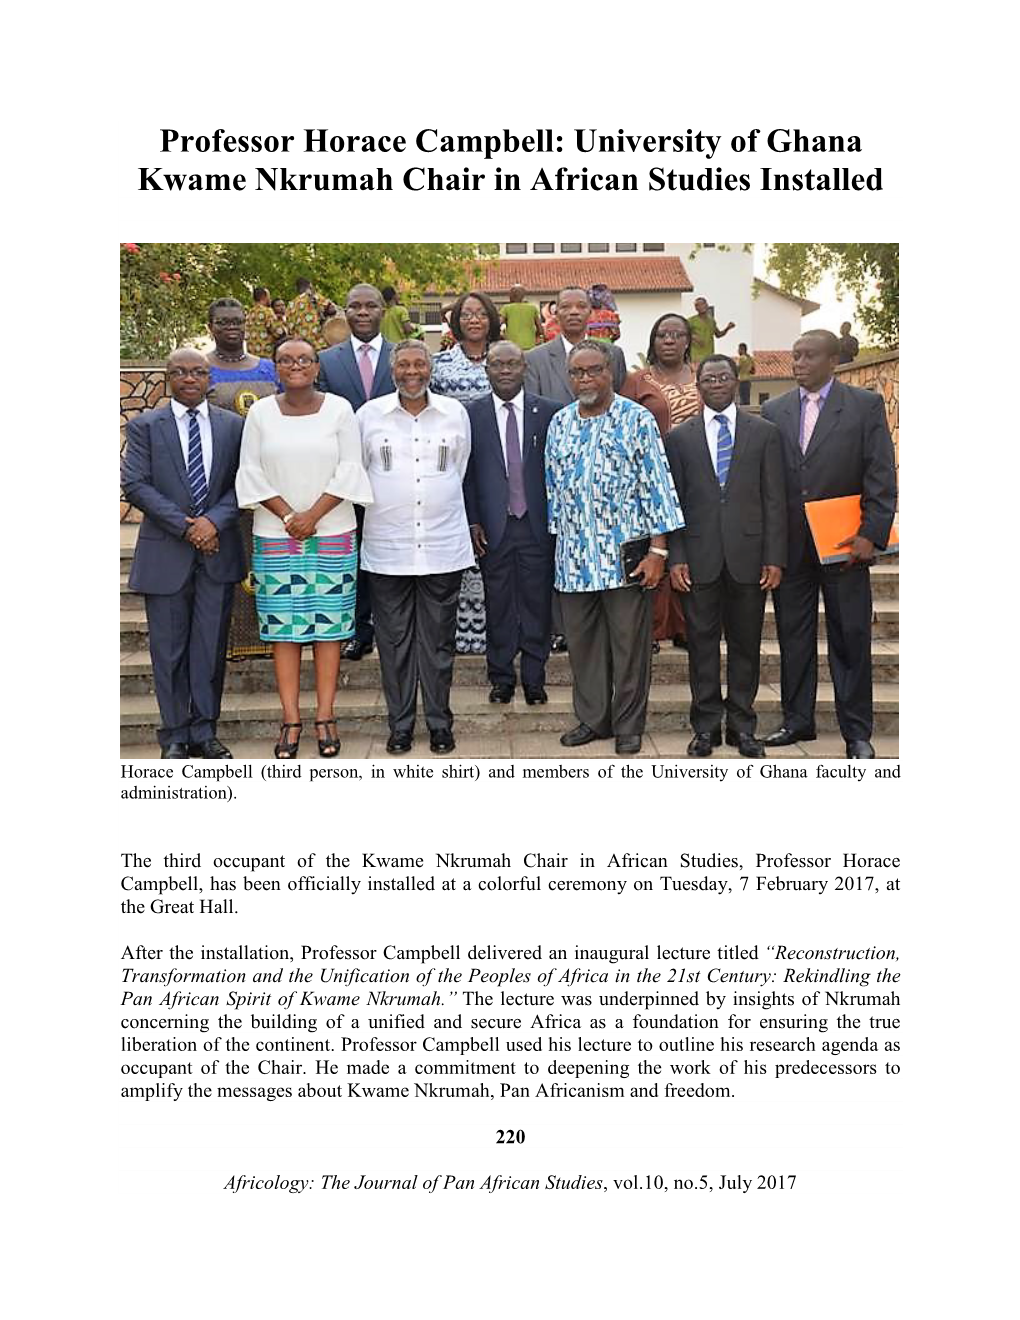 Professor Horace Campbell: University of Ghana Kwame Nkrumah Chair in African Studies Installed